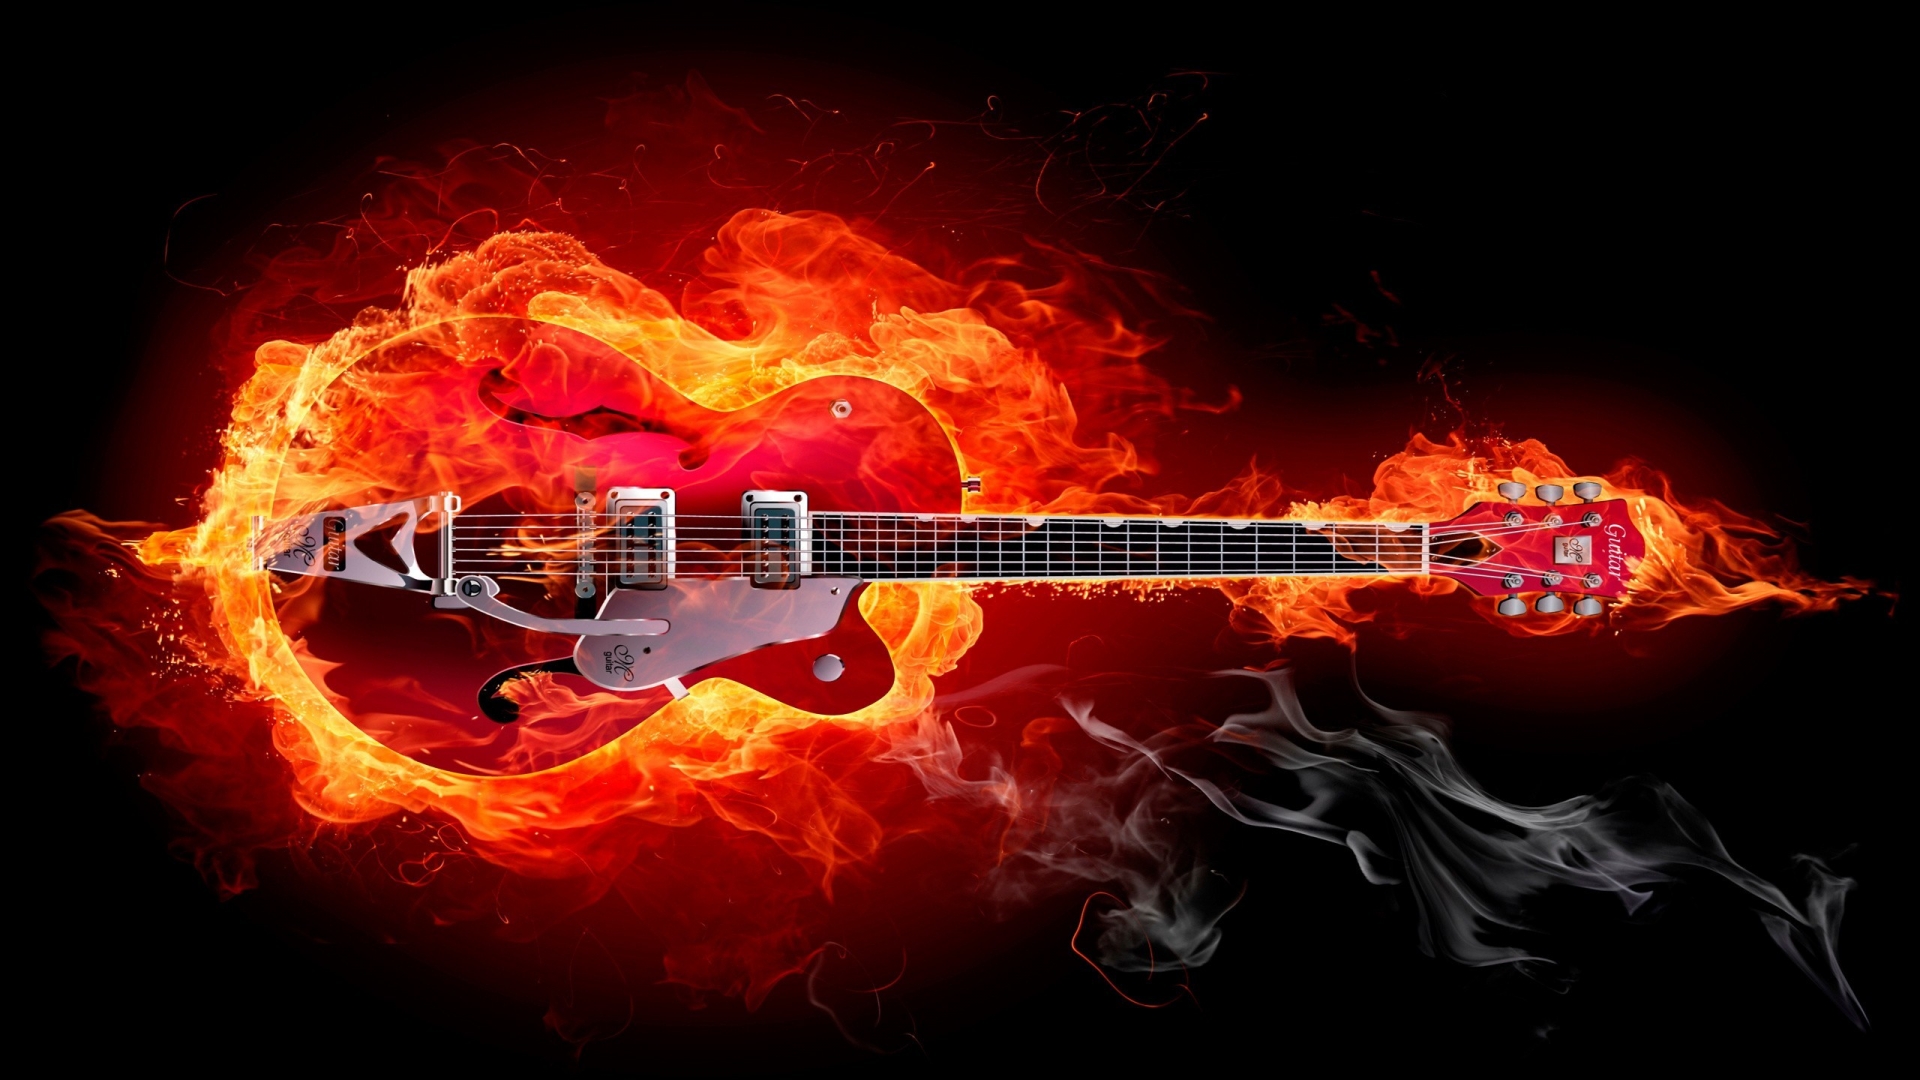 Fire Guitar for 1920 x 1080 HDTV 1080p resolution